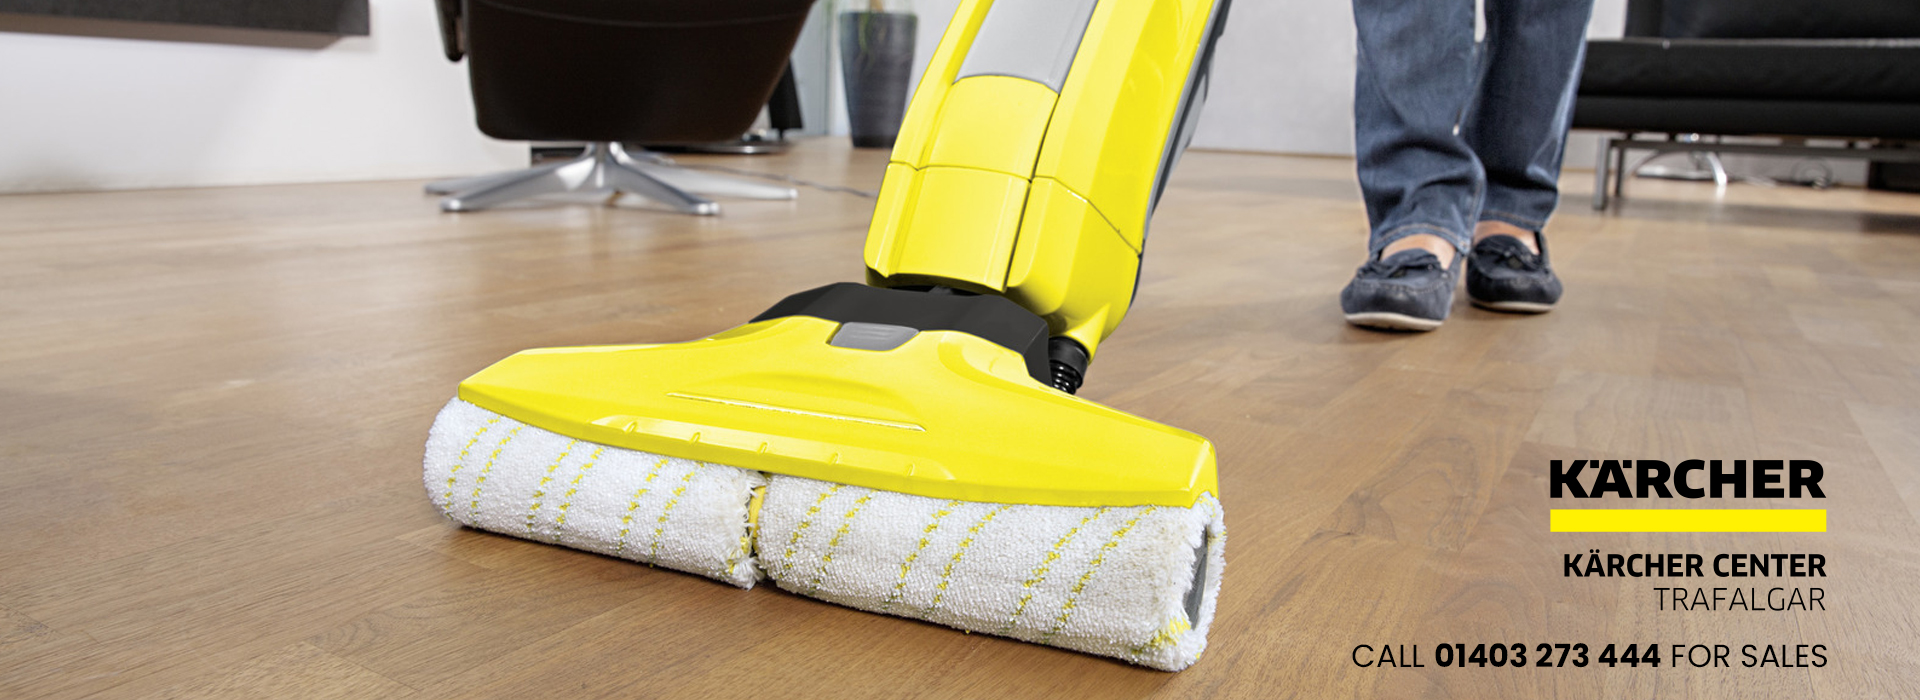 Benefits of using a Kärcher FC5 Hard Floor Cleaner